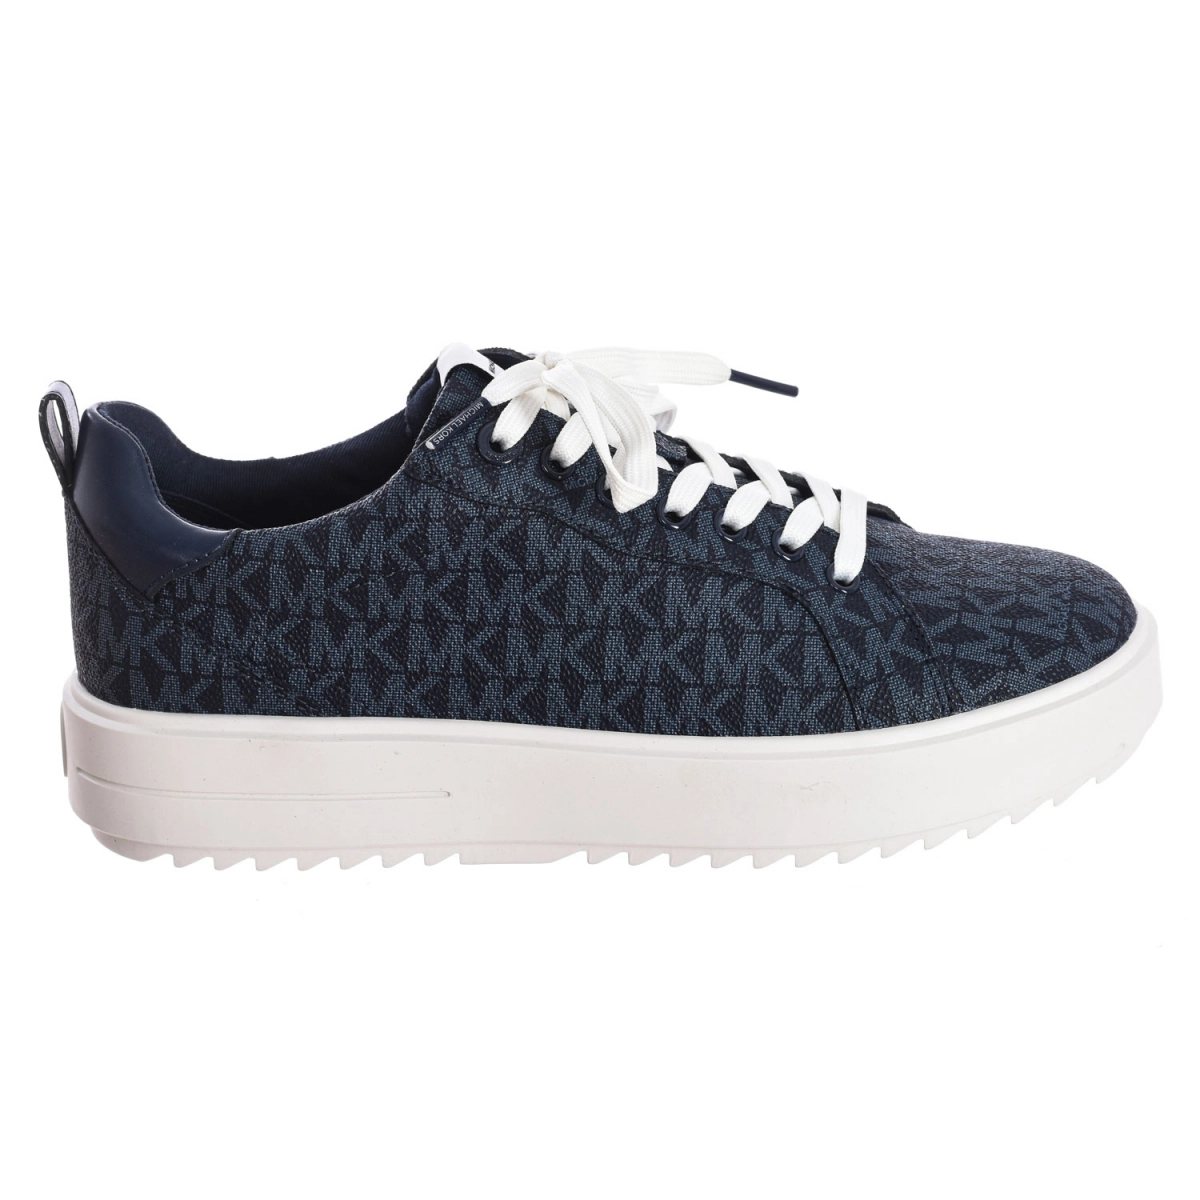 Zapatilla Sneaker Emmett estampada Michael Kors T2ETFS1B mujer Talla: 38.5 Color: Azul T2ETFS1B-ADMIRAL.38.5